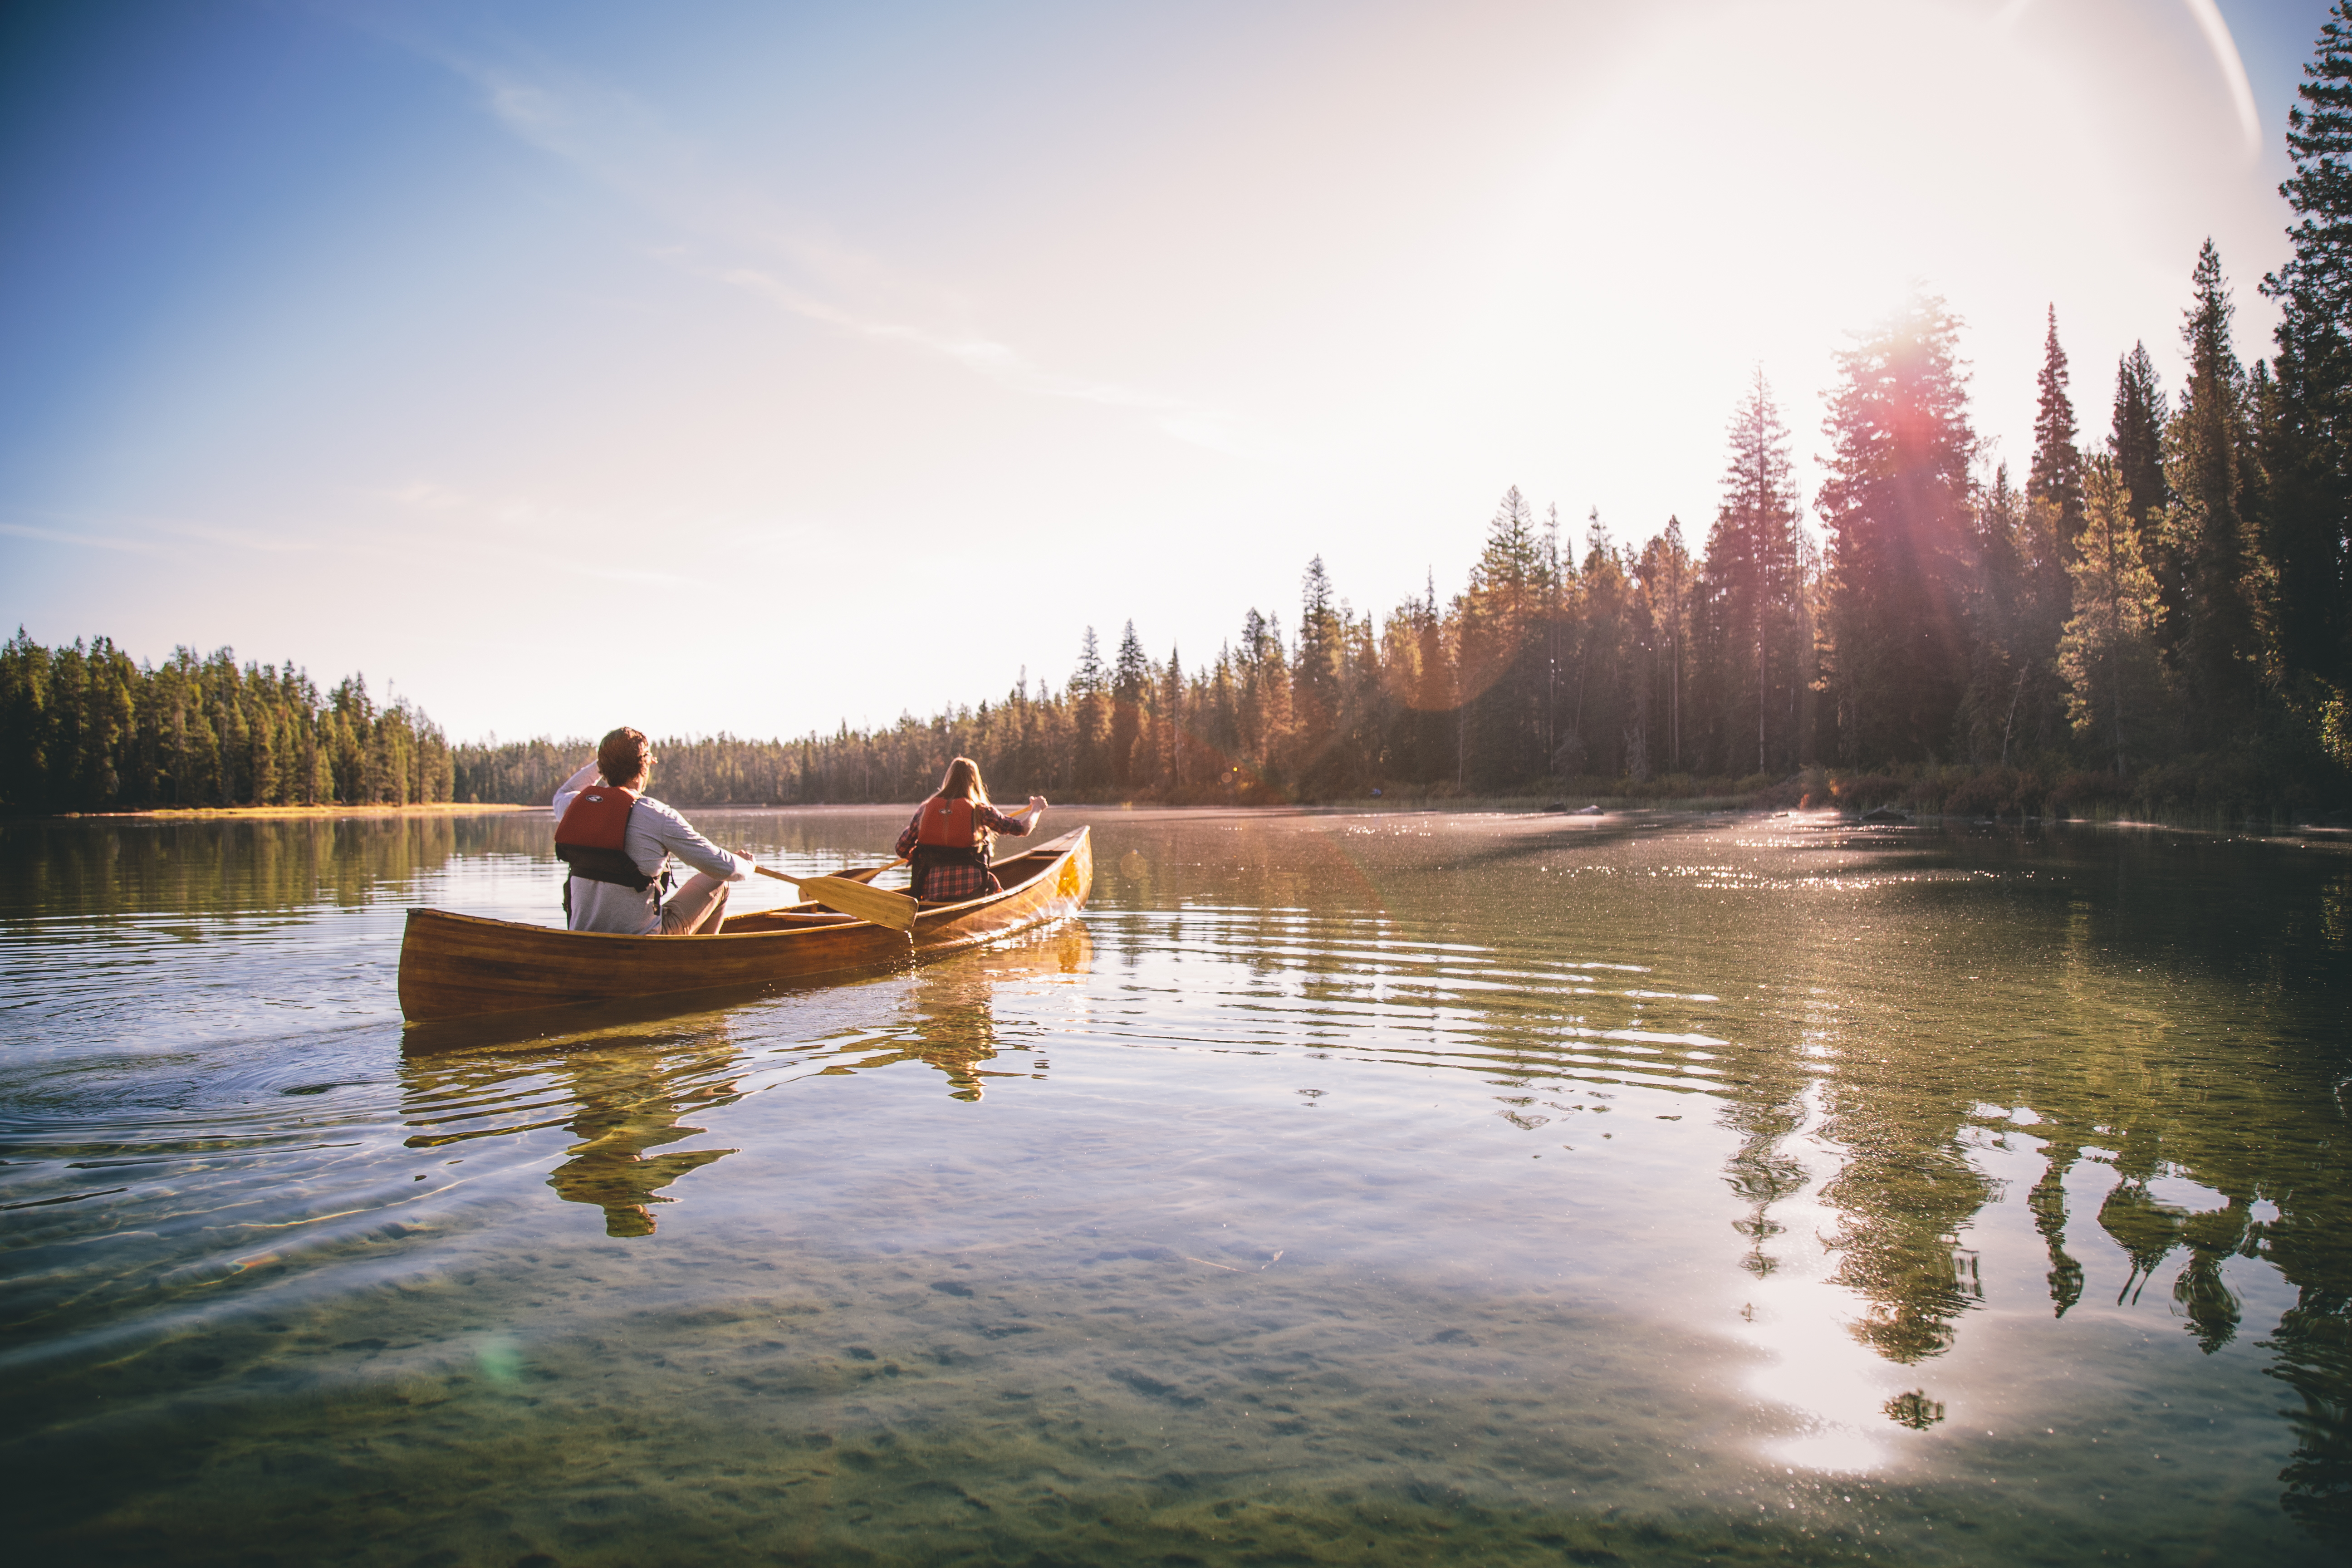 Canoeing & Kayaking | Travel Wyoming. That's WY